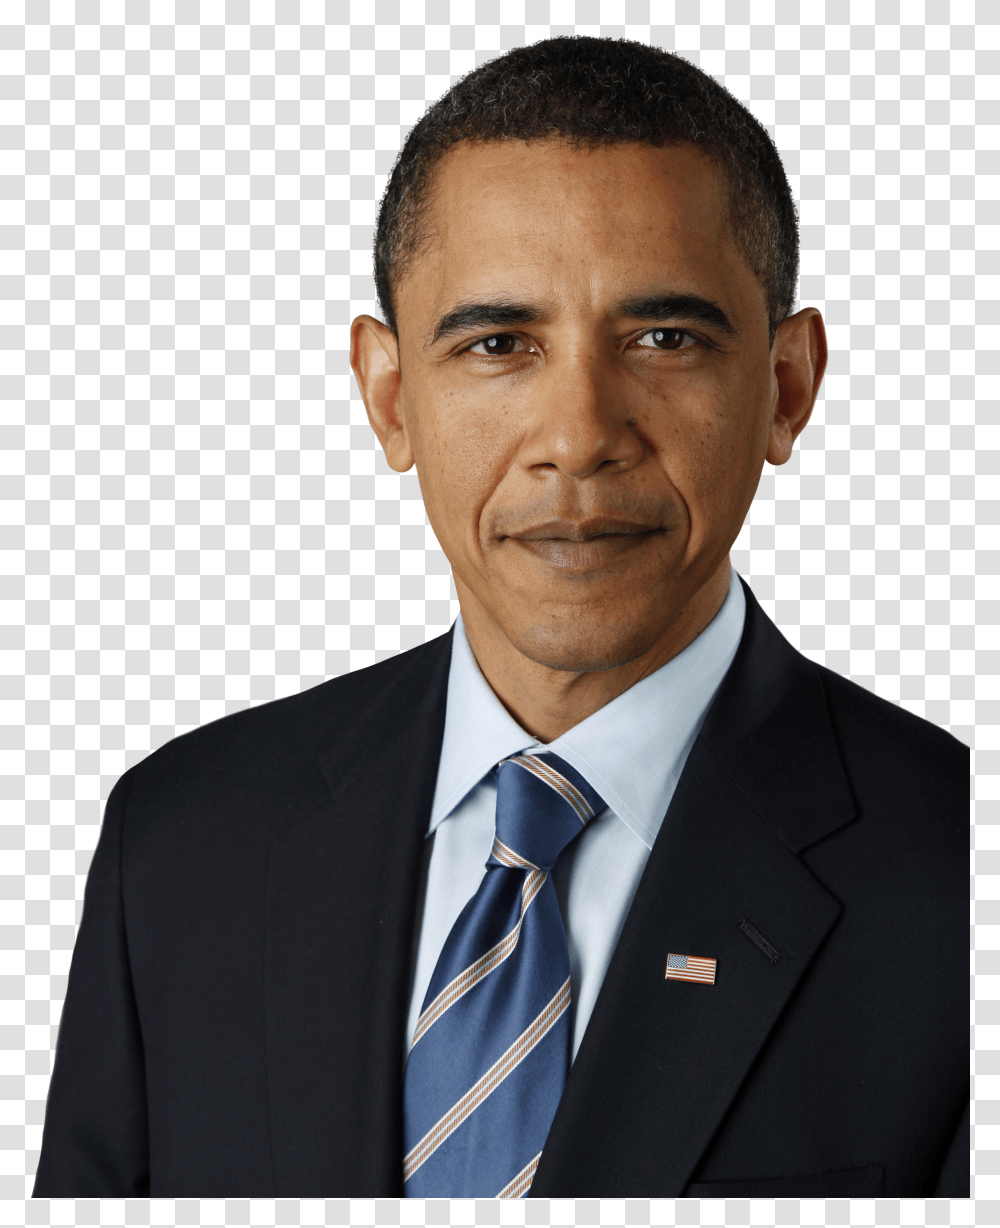 Barack Obama Image Barack Obama Small, Tie, Accessories, Suit, Overcoat Transparent Png